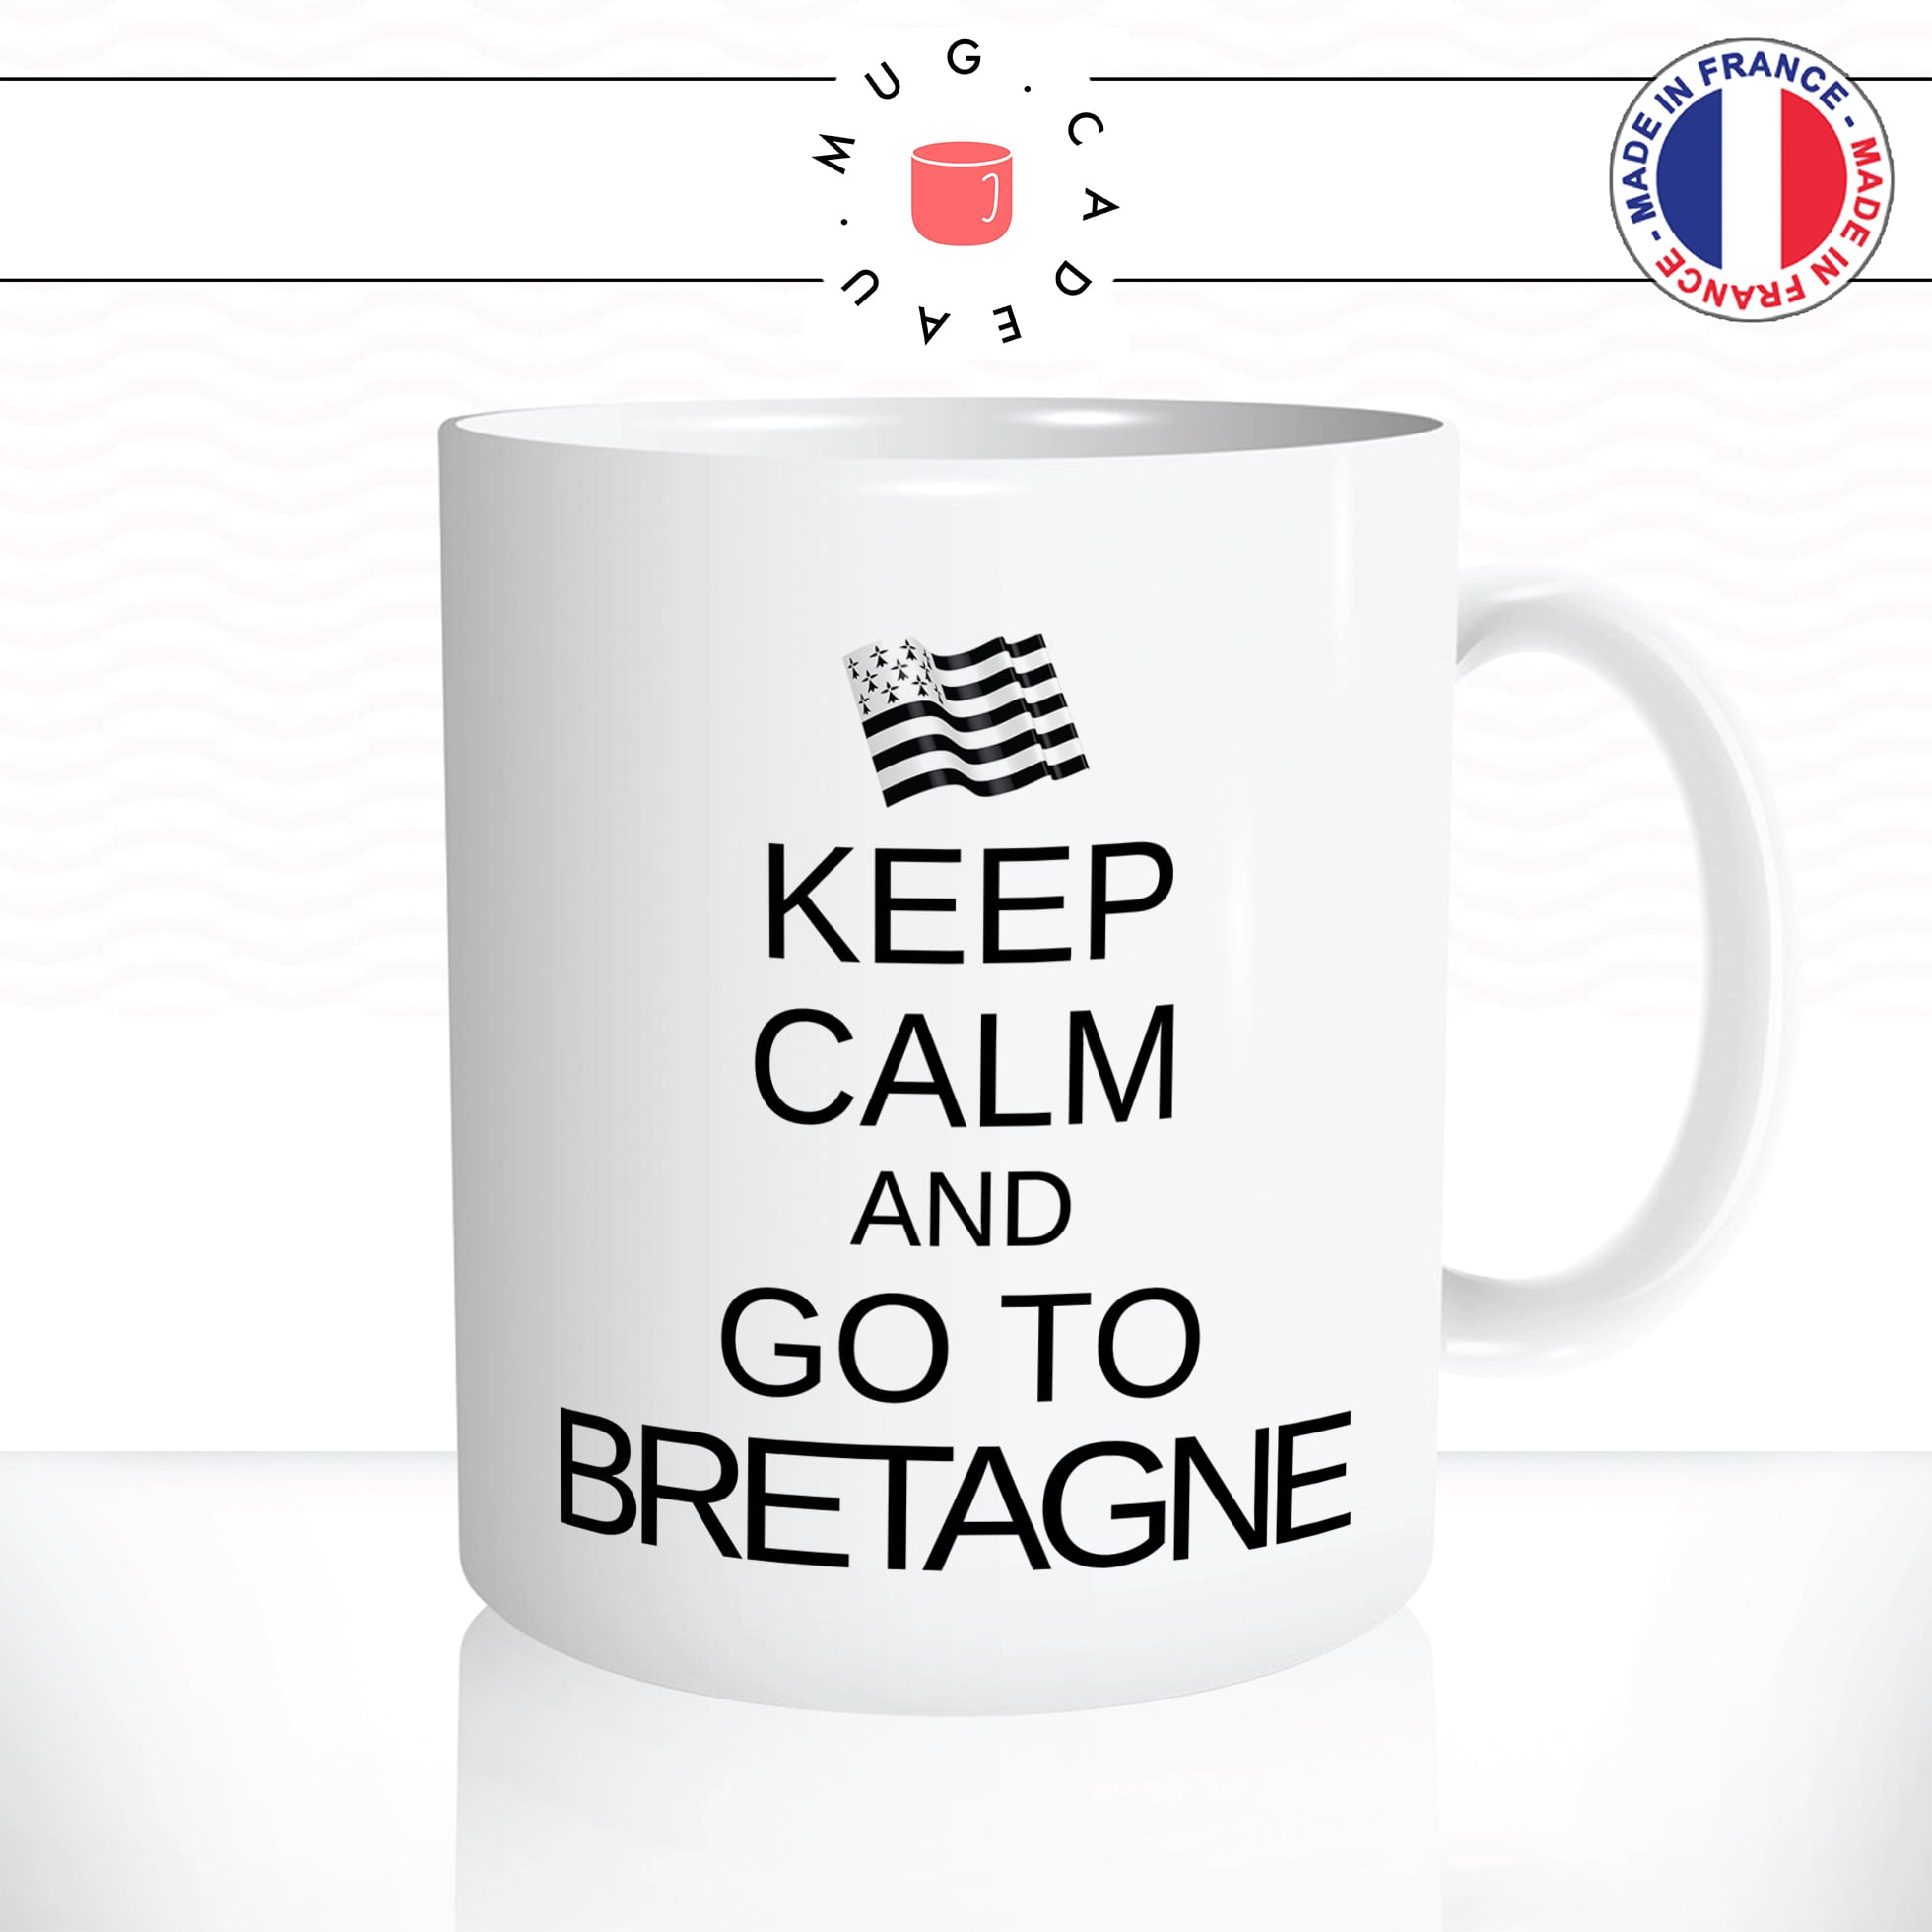 mug-tasse-keepcalm-and-go-to-bretagne-breton-drapeau-france-nord-region-humour-fun-café-thé-idée-cadeau-originale-personnalisée2-min